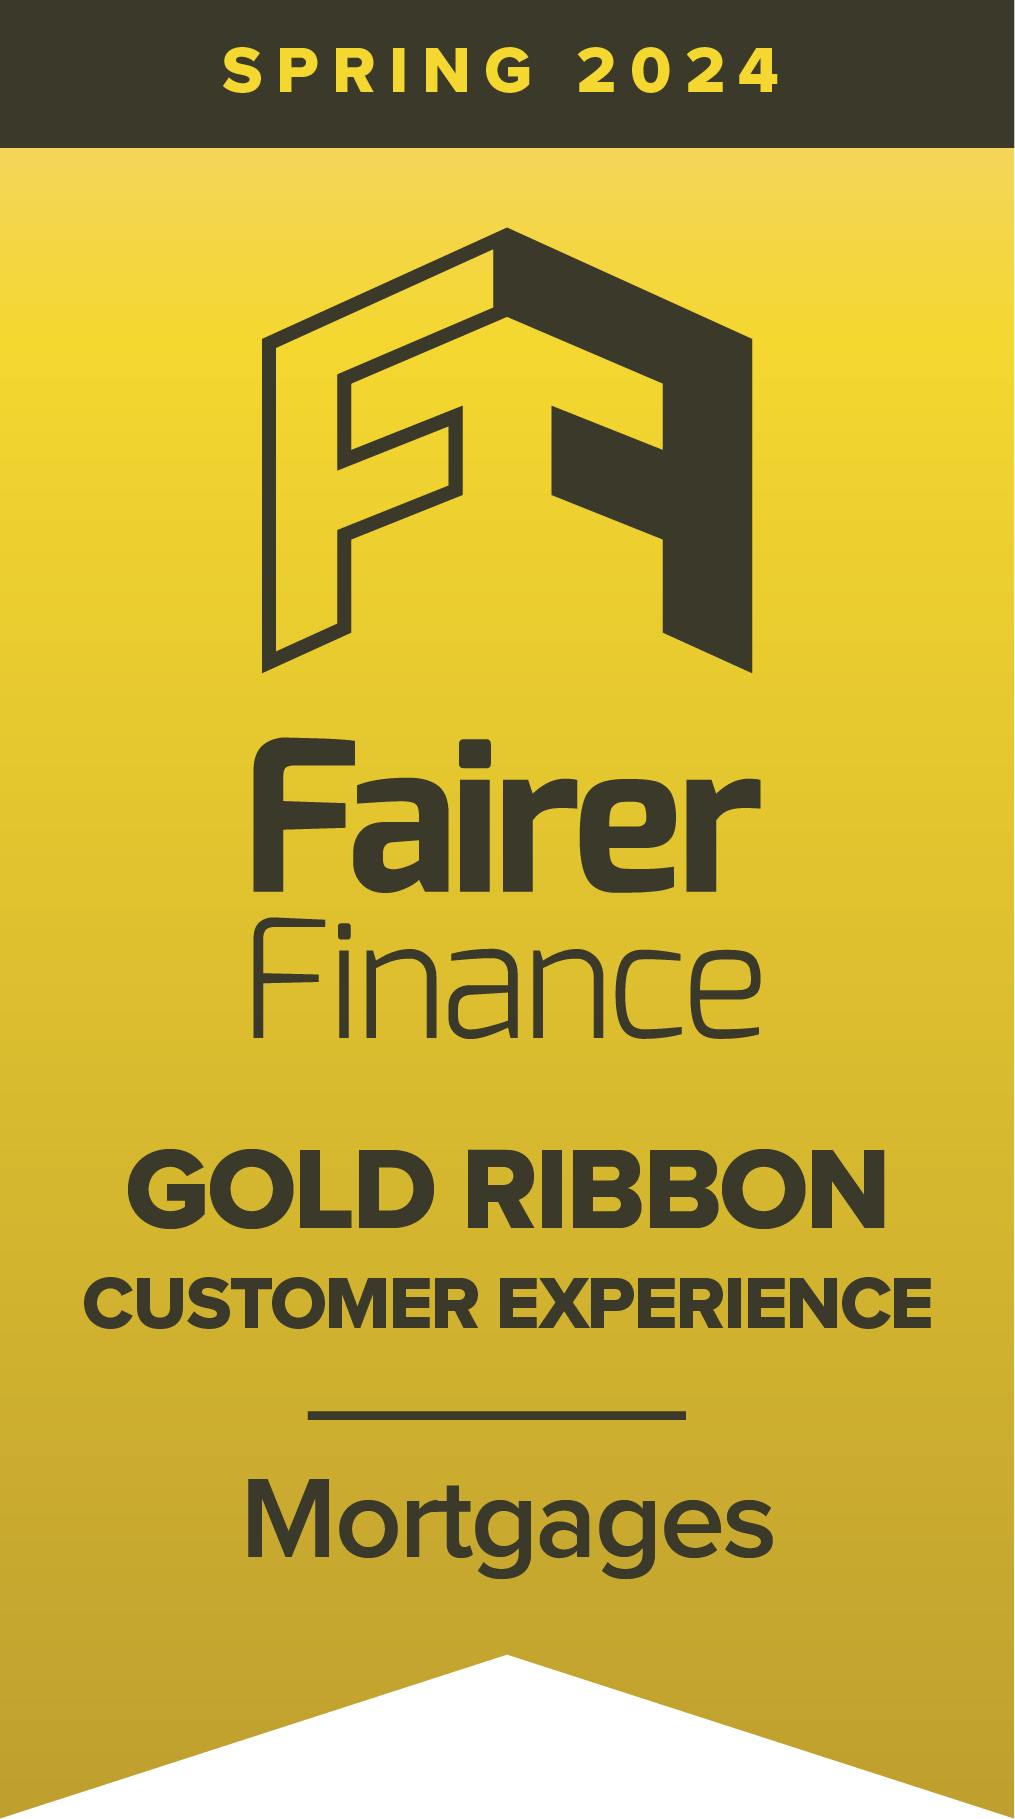 Fairer finance award - Gold Ribbon for Customer Experience